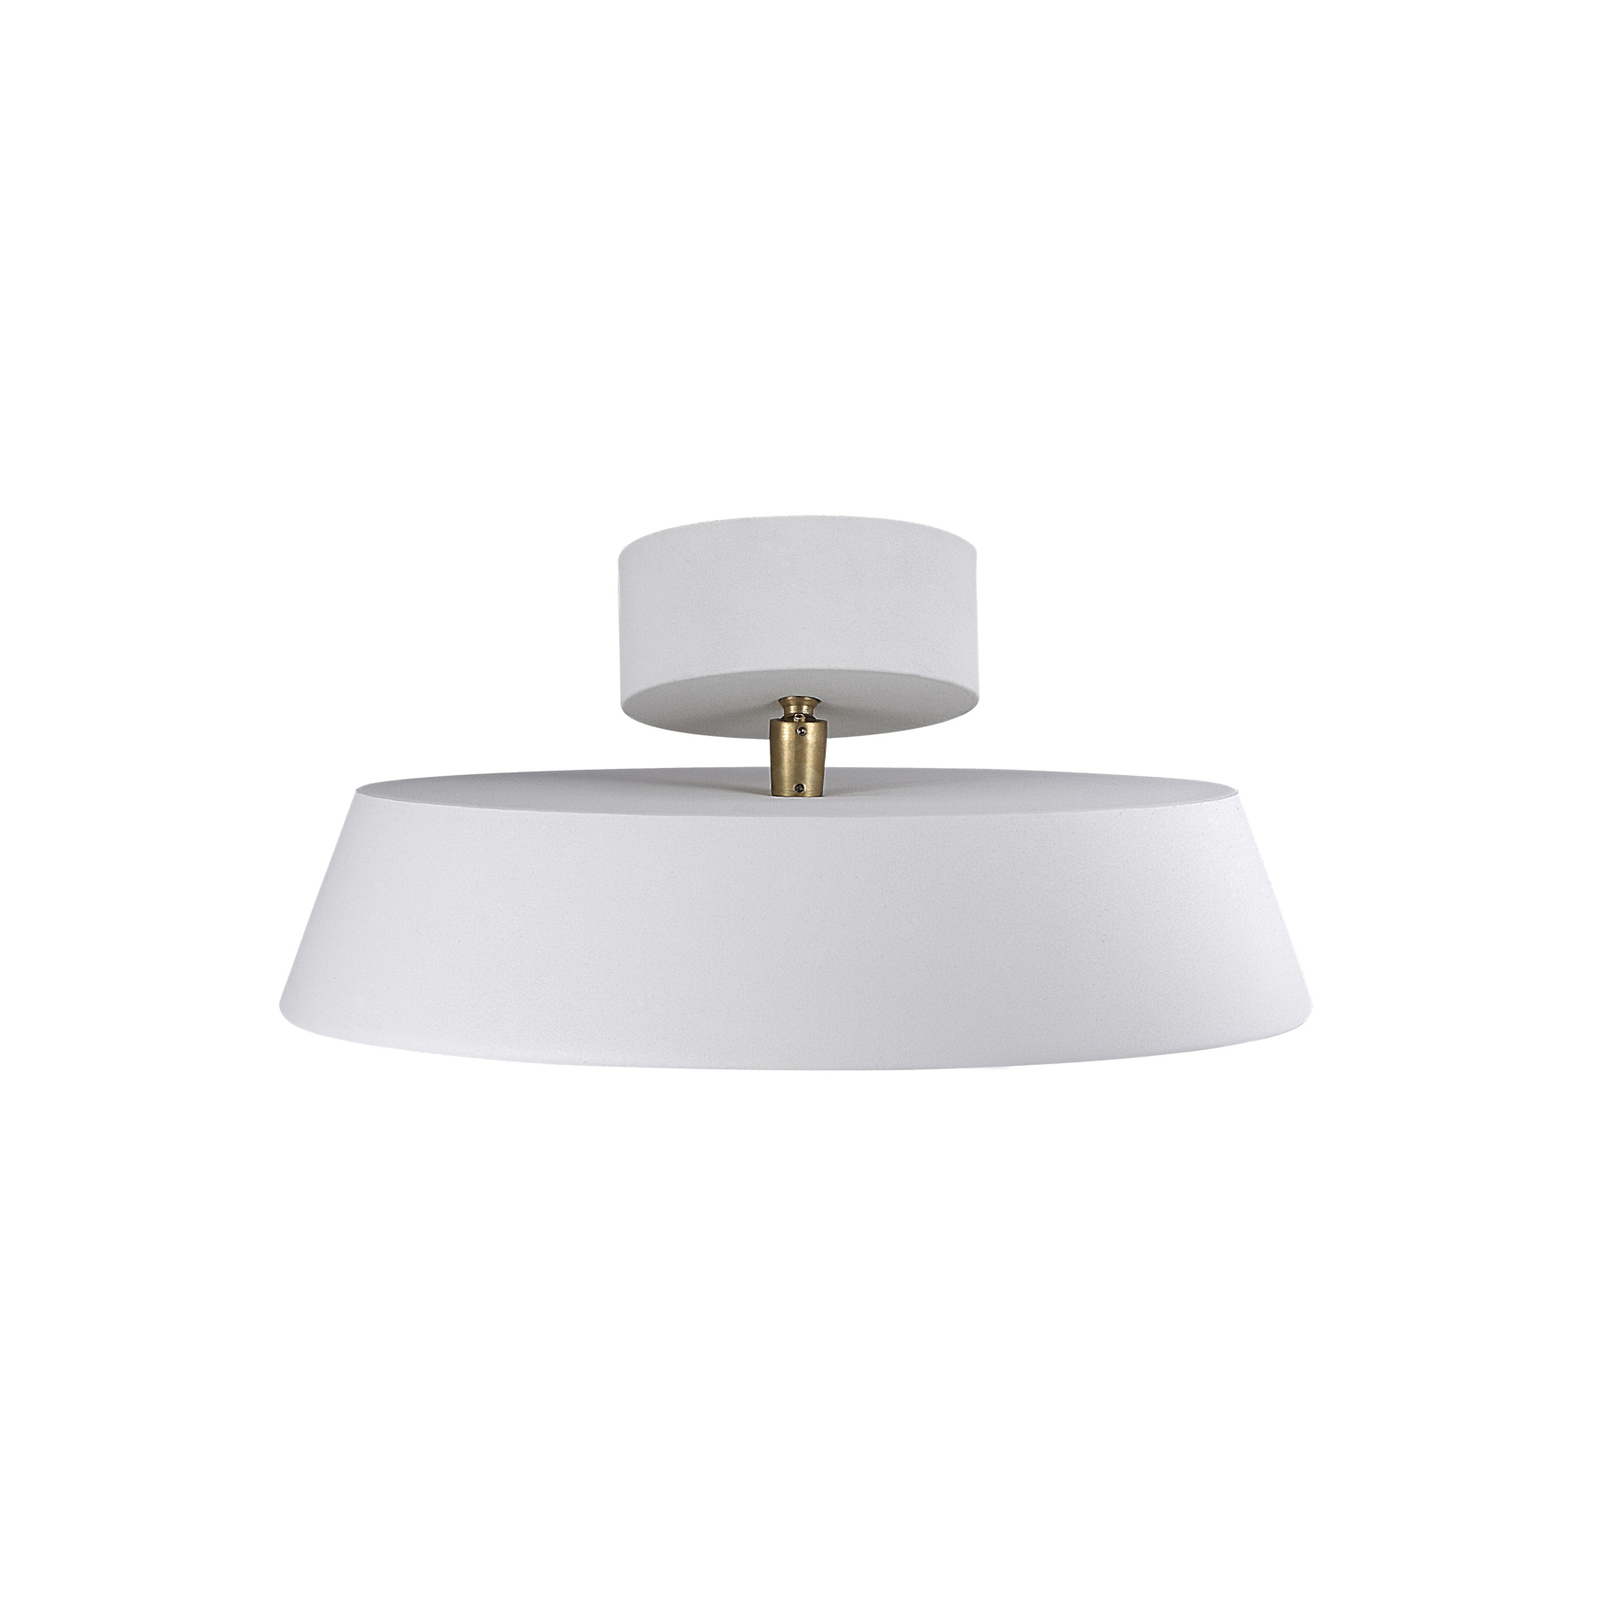 LED ceiling light Kaito 2 Dim, white, Ø 30 cm, dimmable